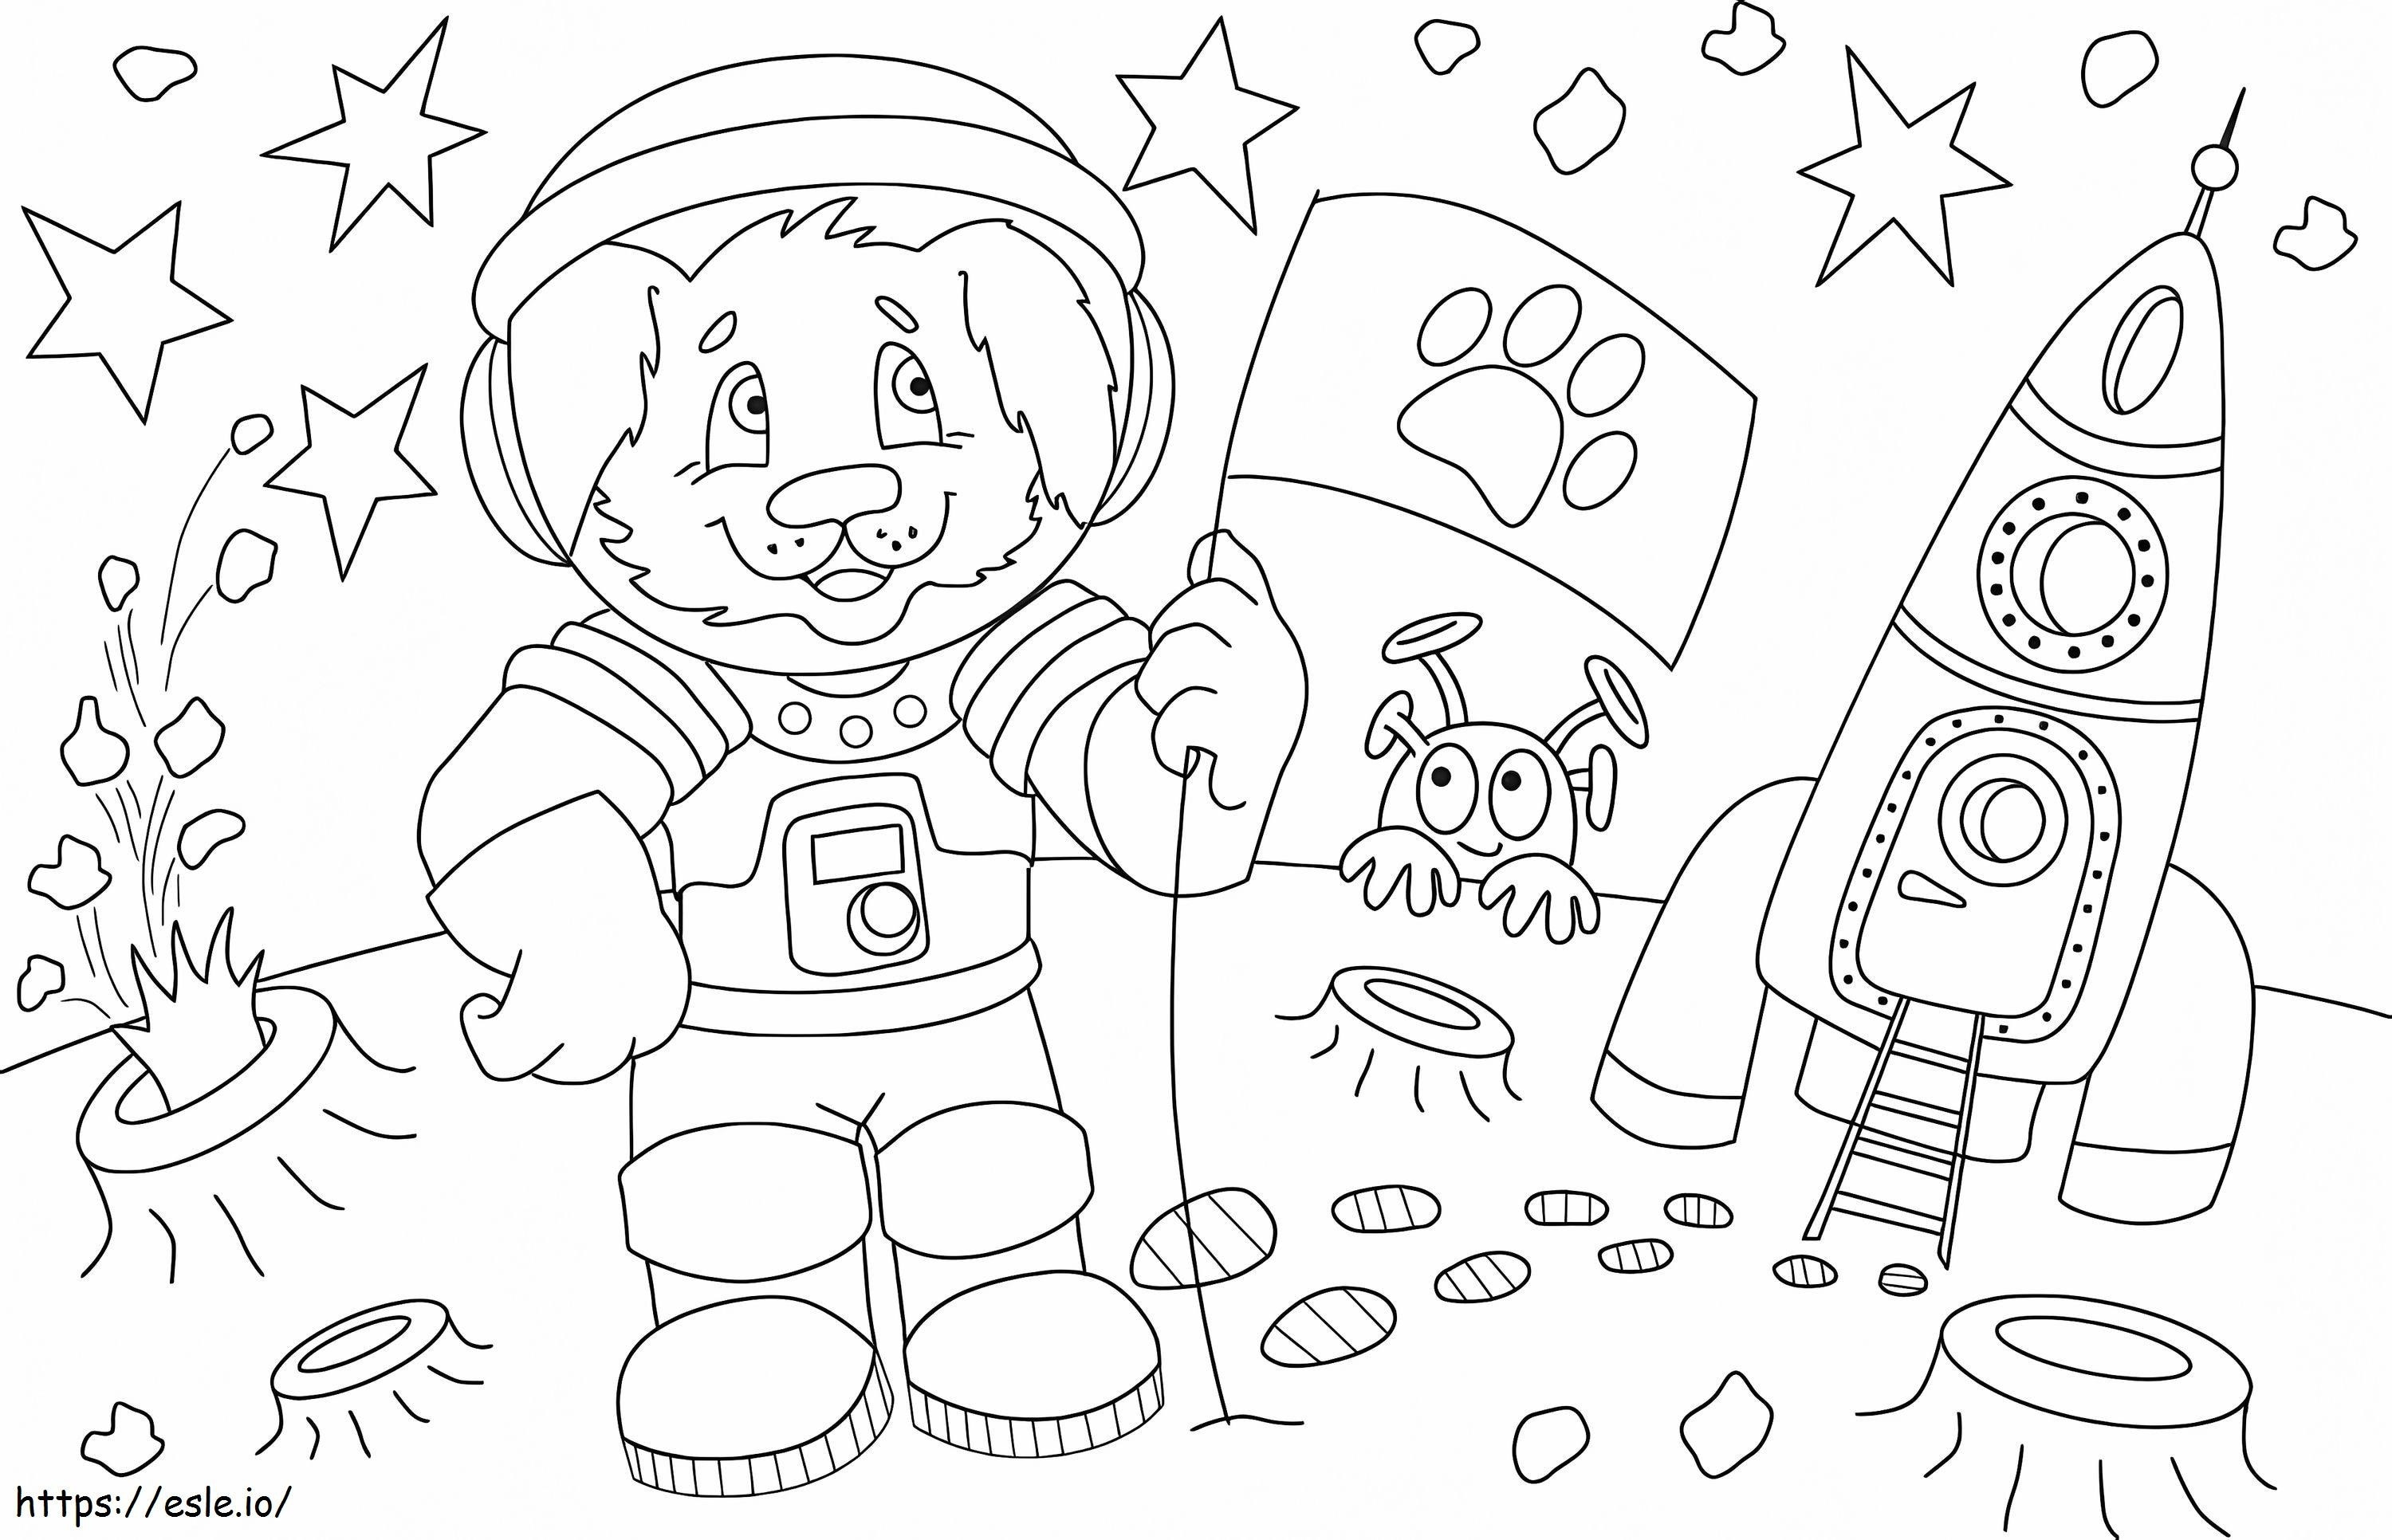 Cartoon-Tier-Astronaut ausmalbilder